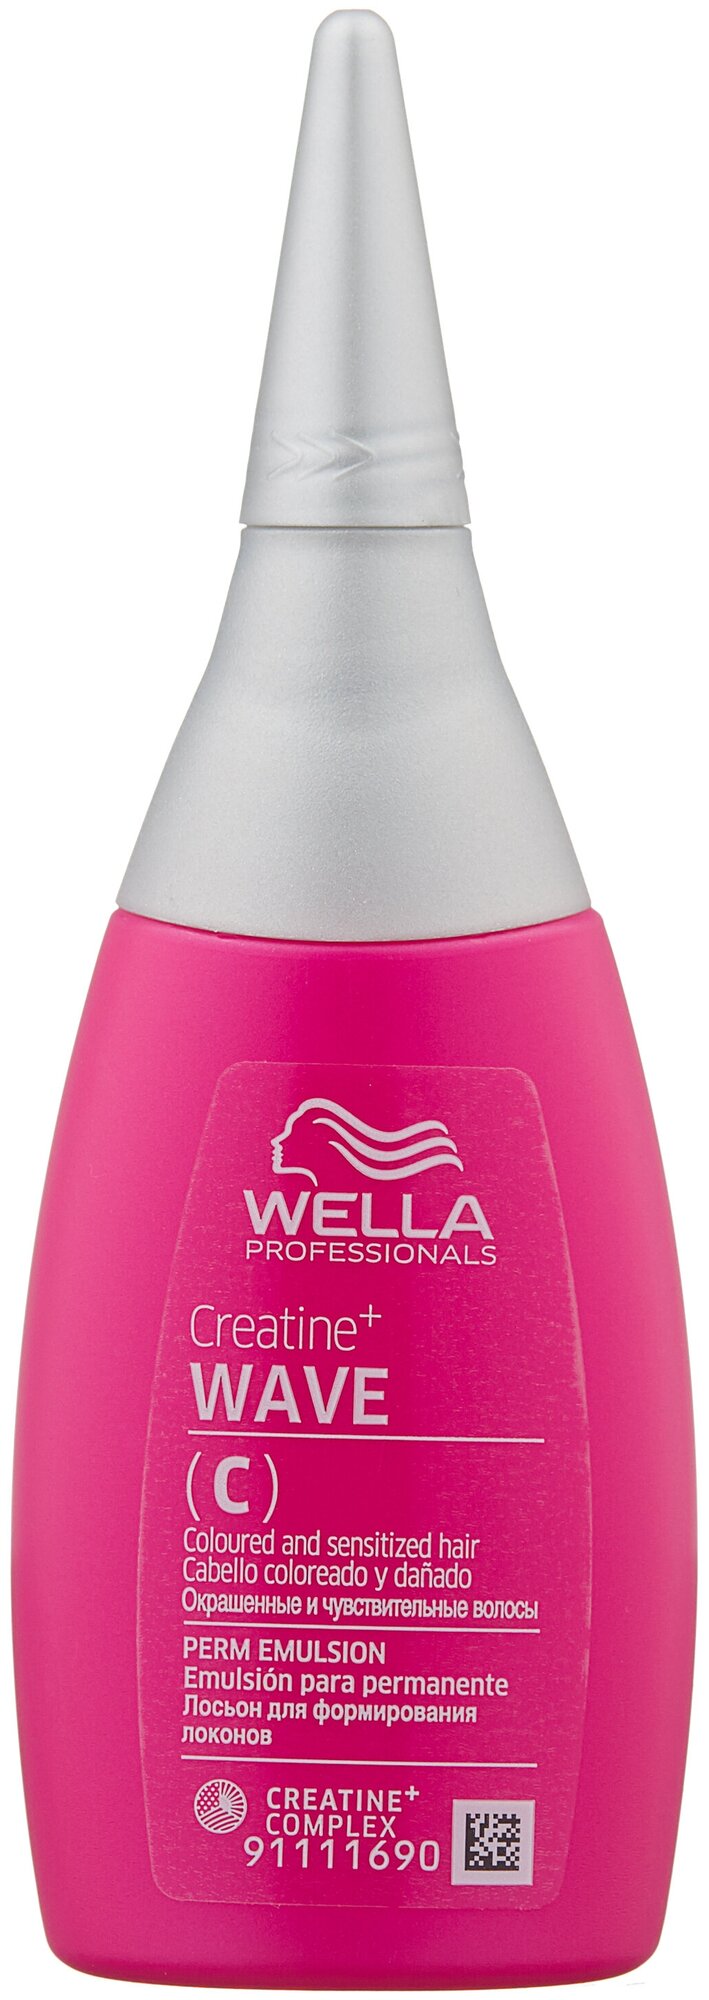 Wella Professionals CREATINE+ WAVE      ,  , 75 